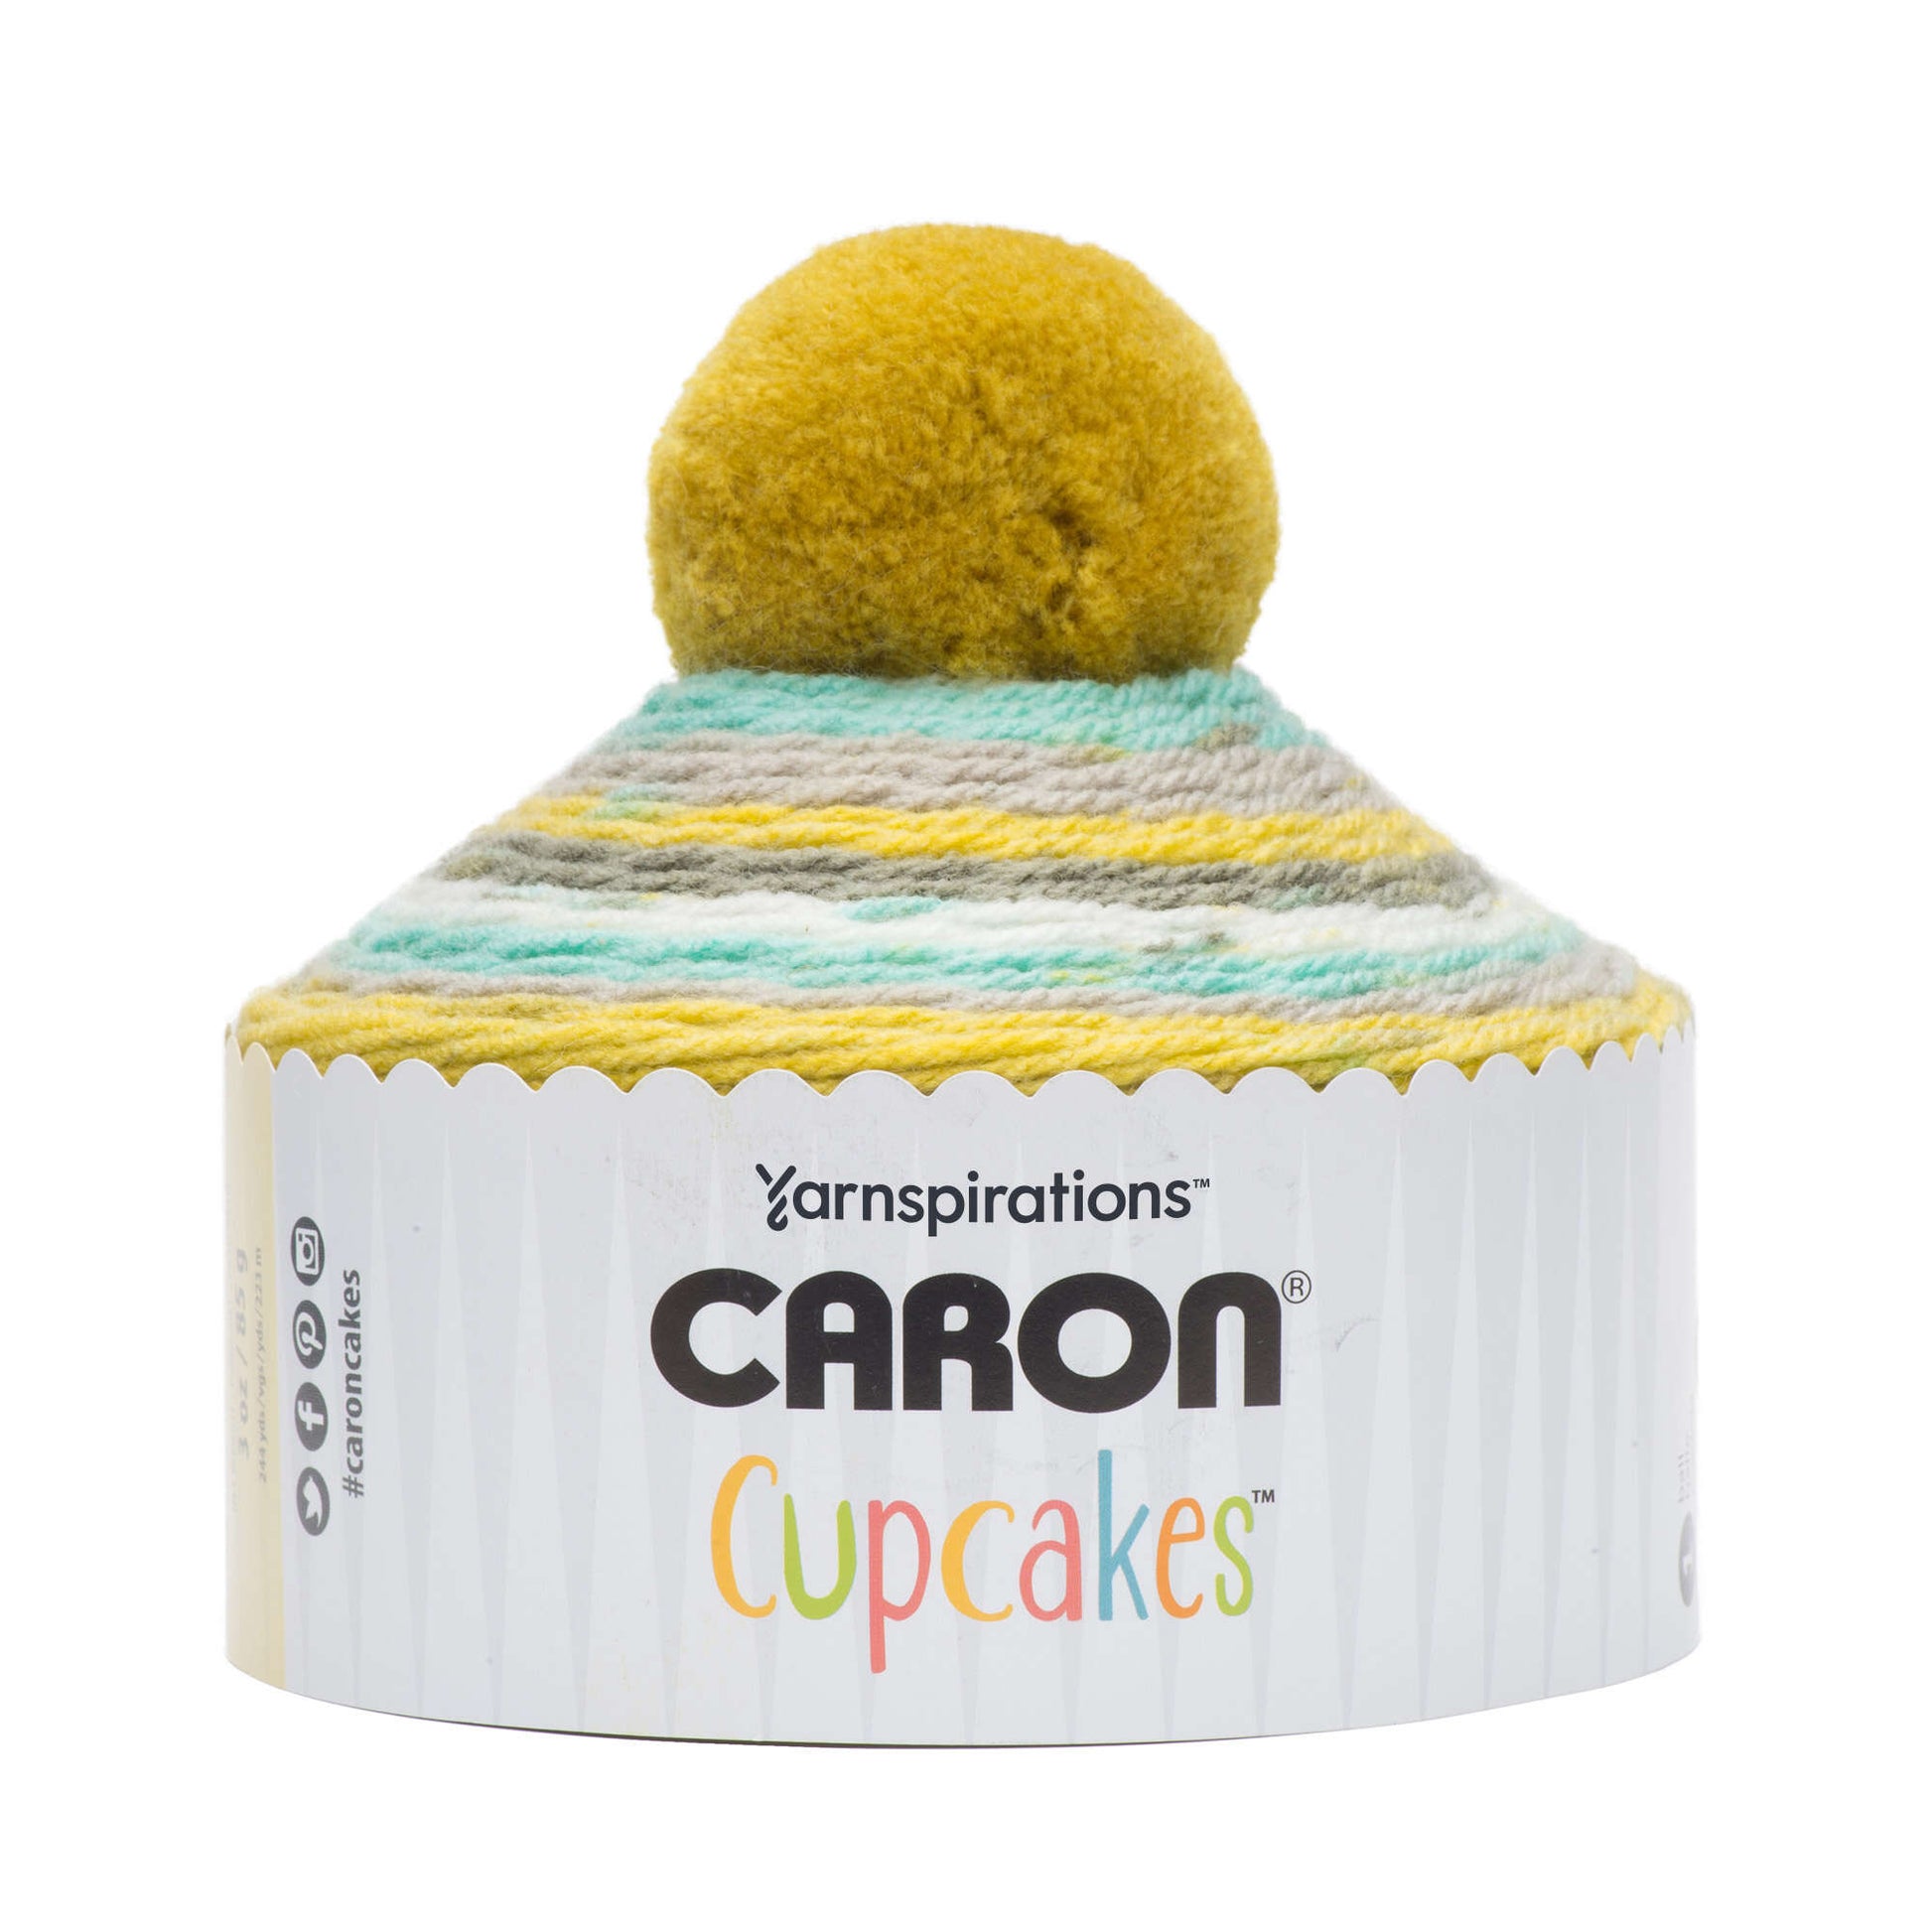 Caron Cupcakes Yarn - Discontinued Shades Pistachio Cup